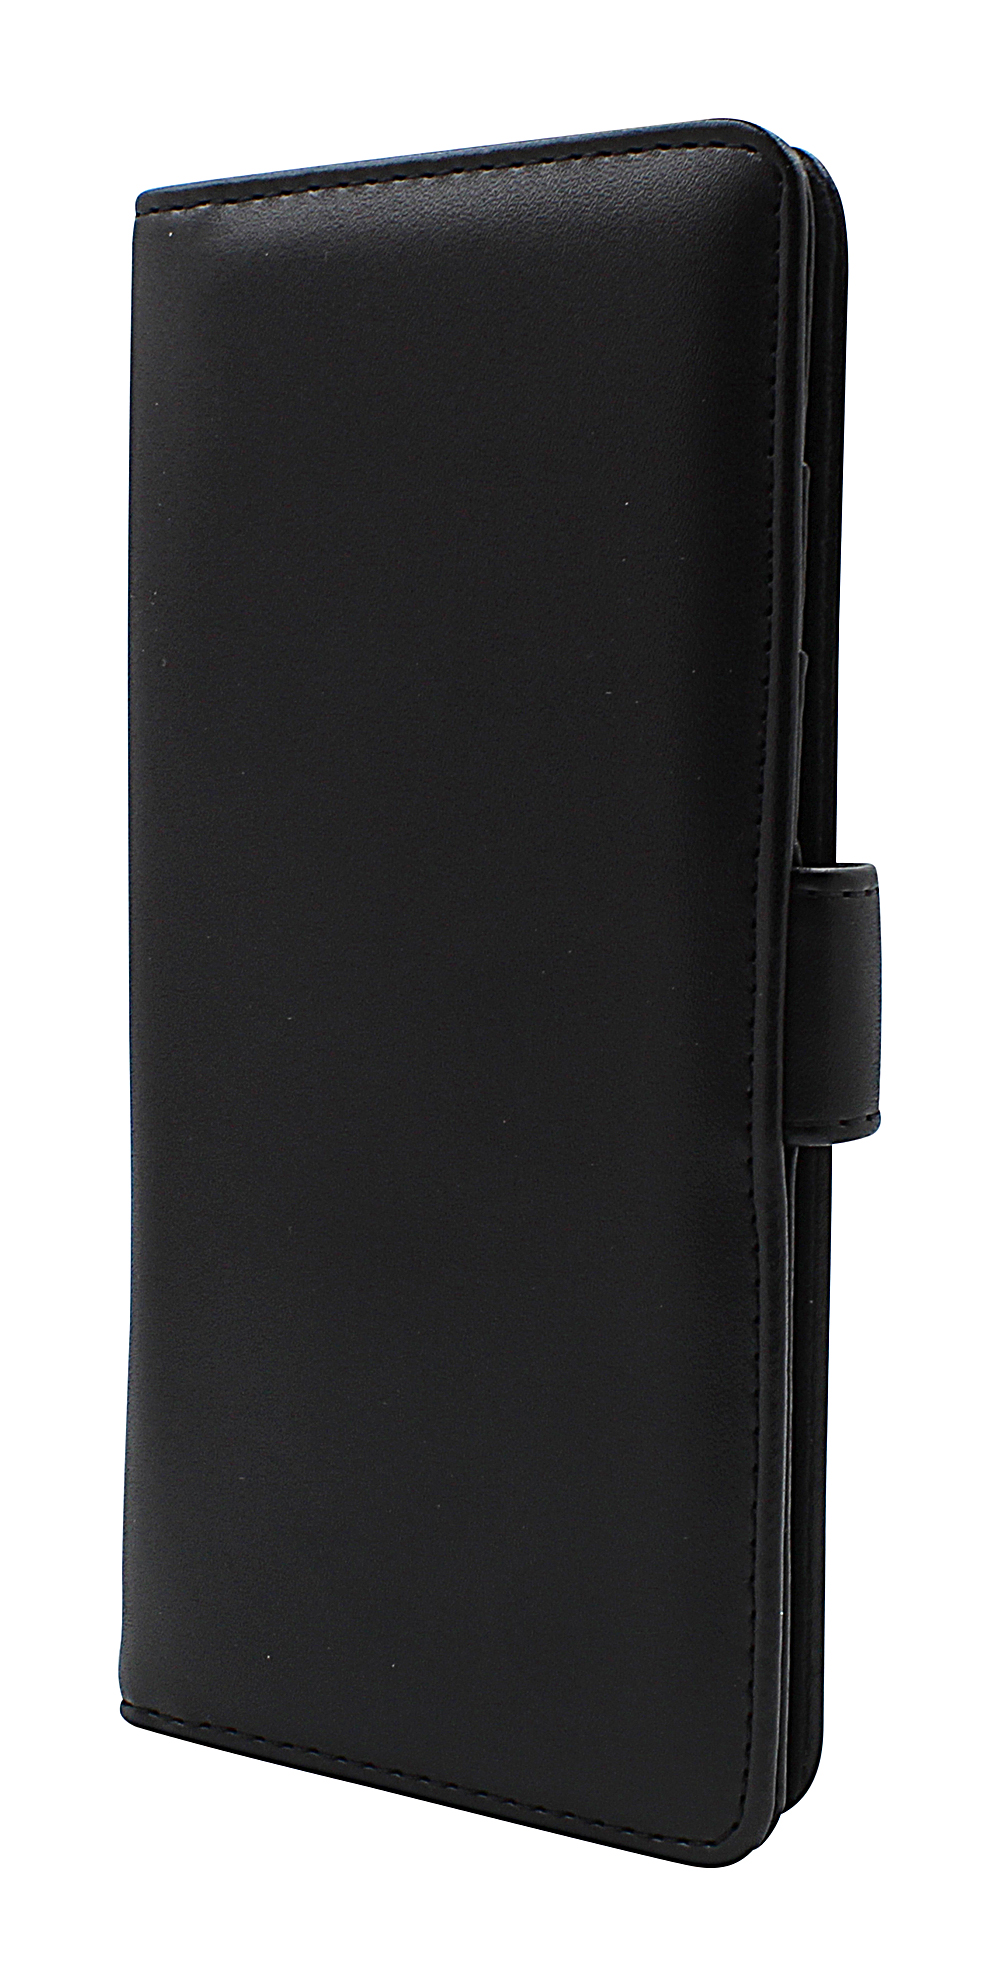 Skimblocker Lommebok-etui Samsung Galaxy A71 (A715F/DS)